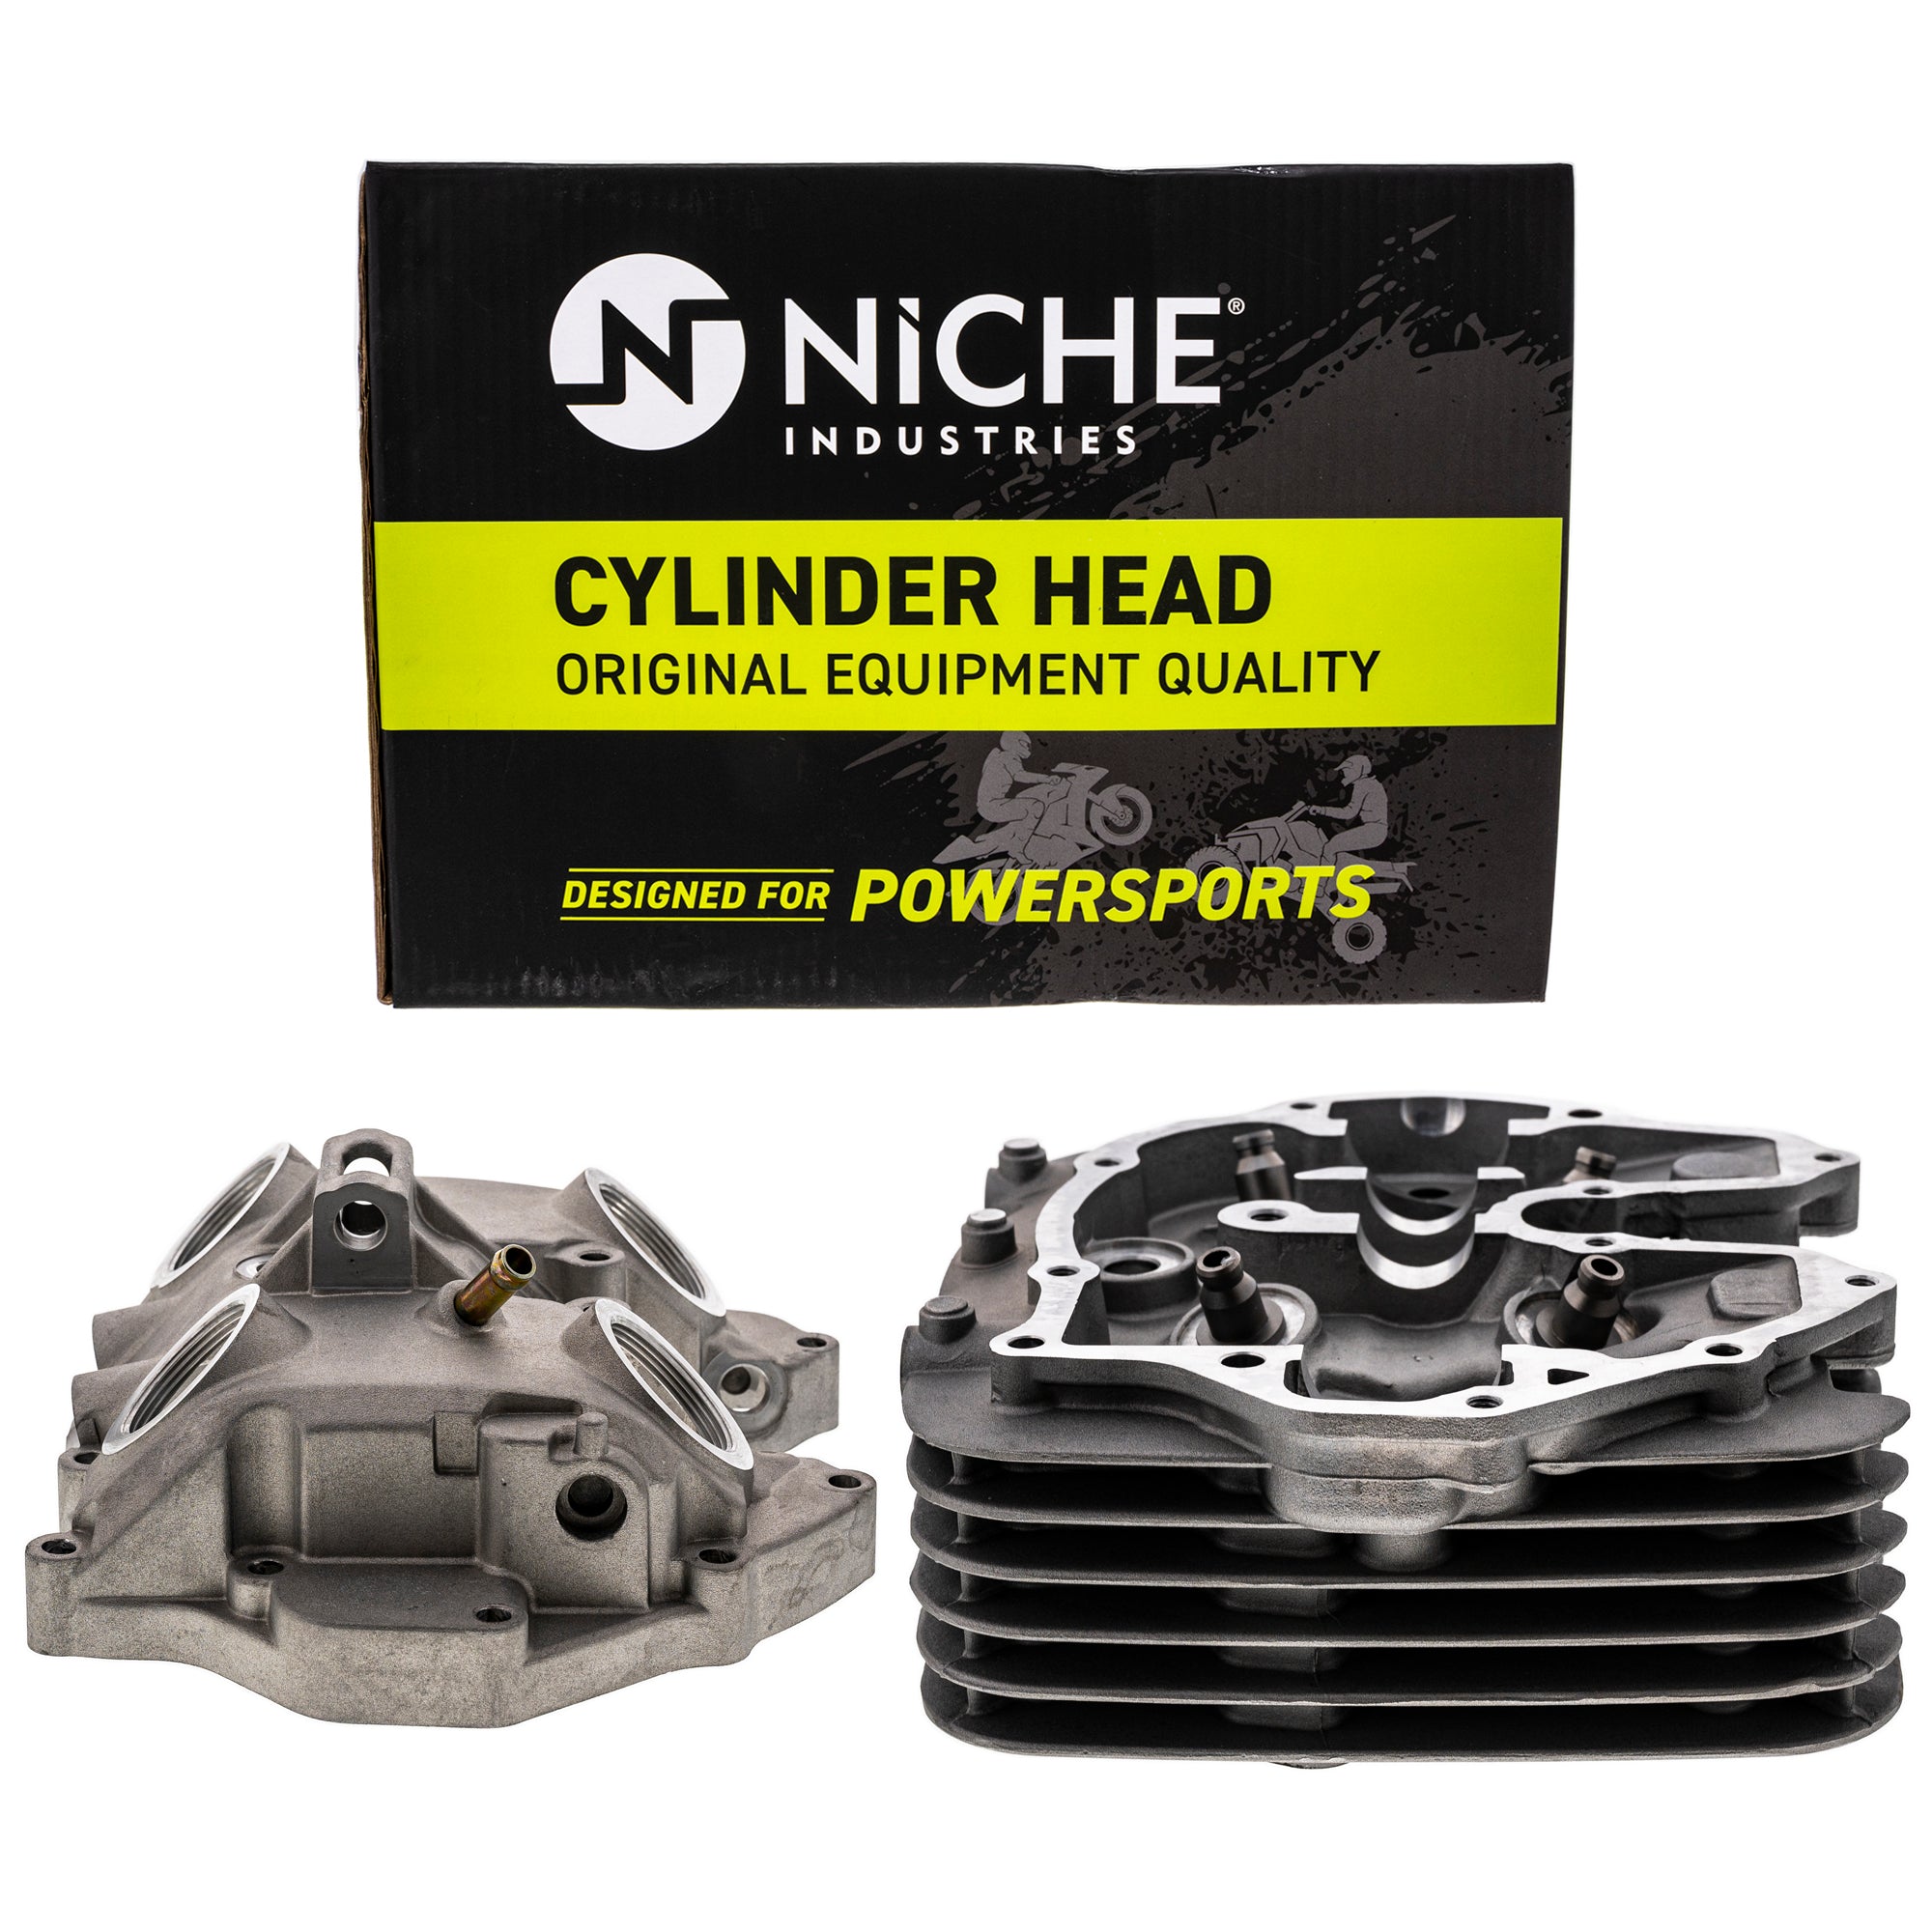 NICHE Cylinder Head 12310-HN1-A70 12310-HN1-010